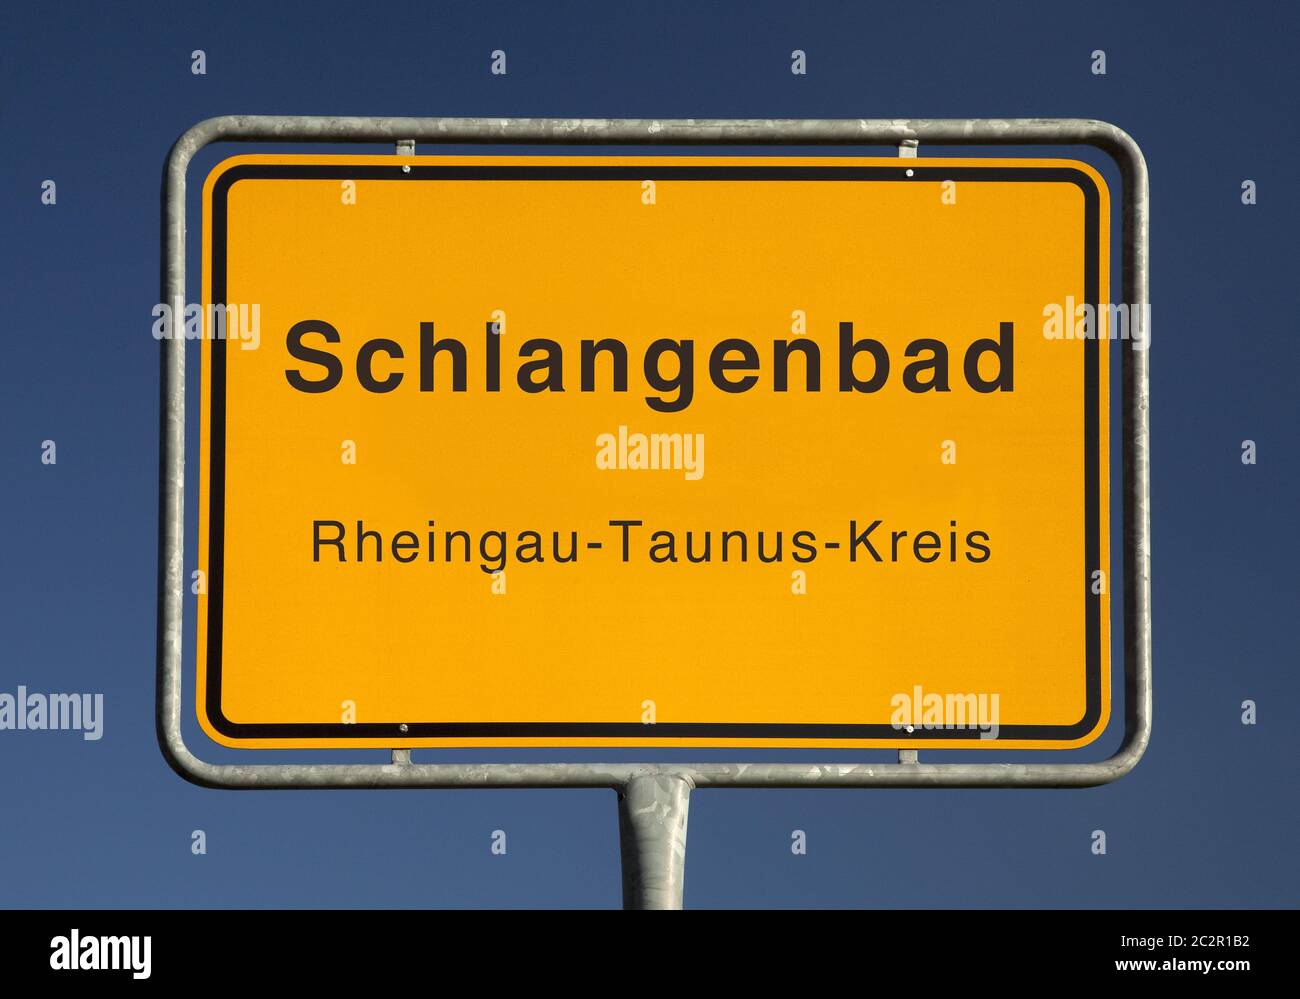 https://c8.alamy.com/comp/2C2R1B2/city-limits-sign-schlangenbad-or-snake-bath-rheingau-taunus-kreis-hesse-germany-europe-2C2R1B2.jpg